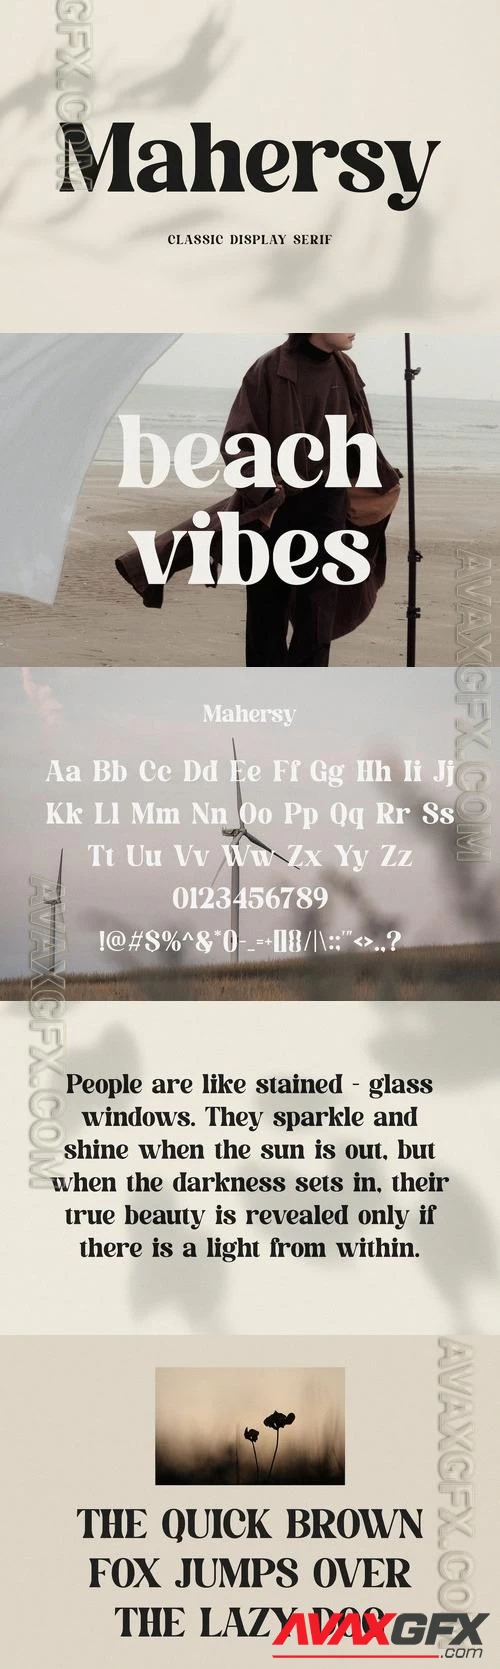 Mahersy - Classic Display Serif